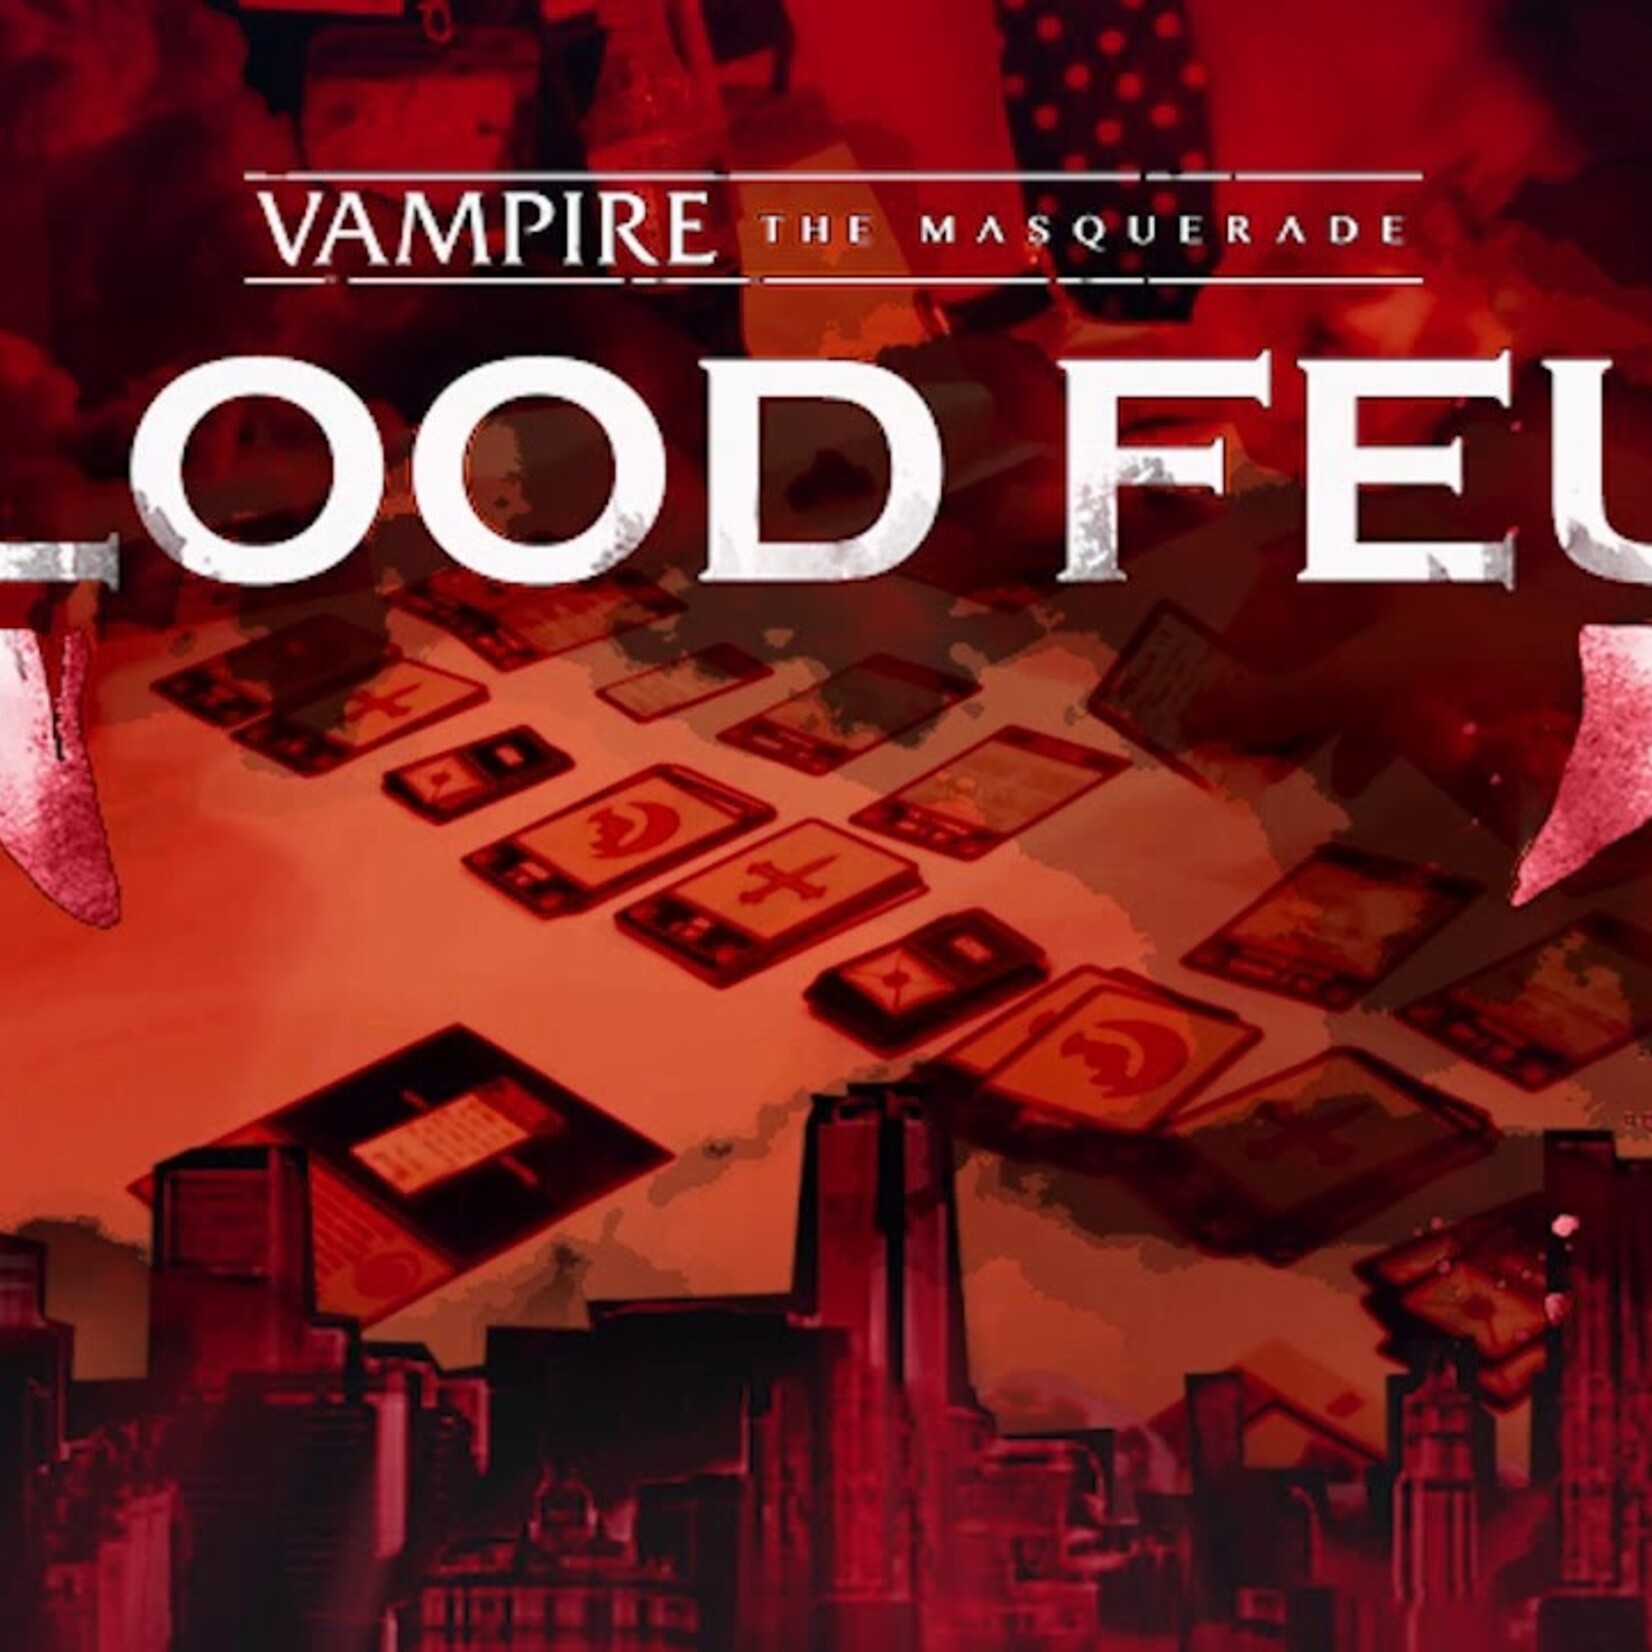 Vampire RIVALS BLOOD FEUD Big Event FIRST LIGHT